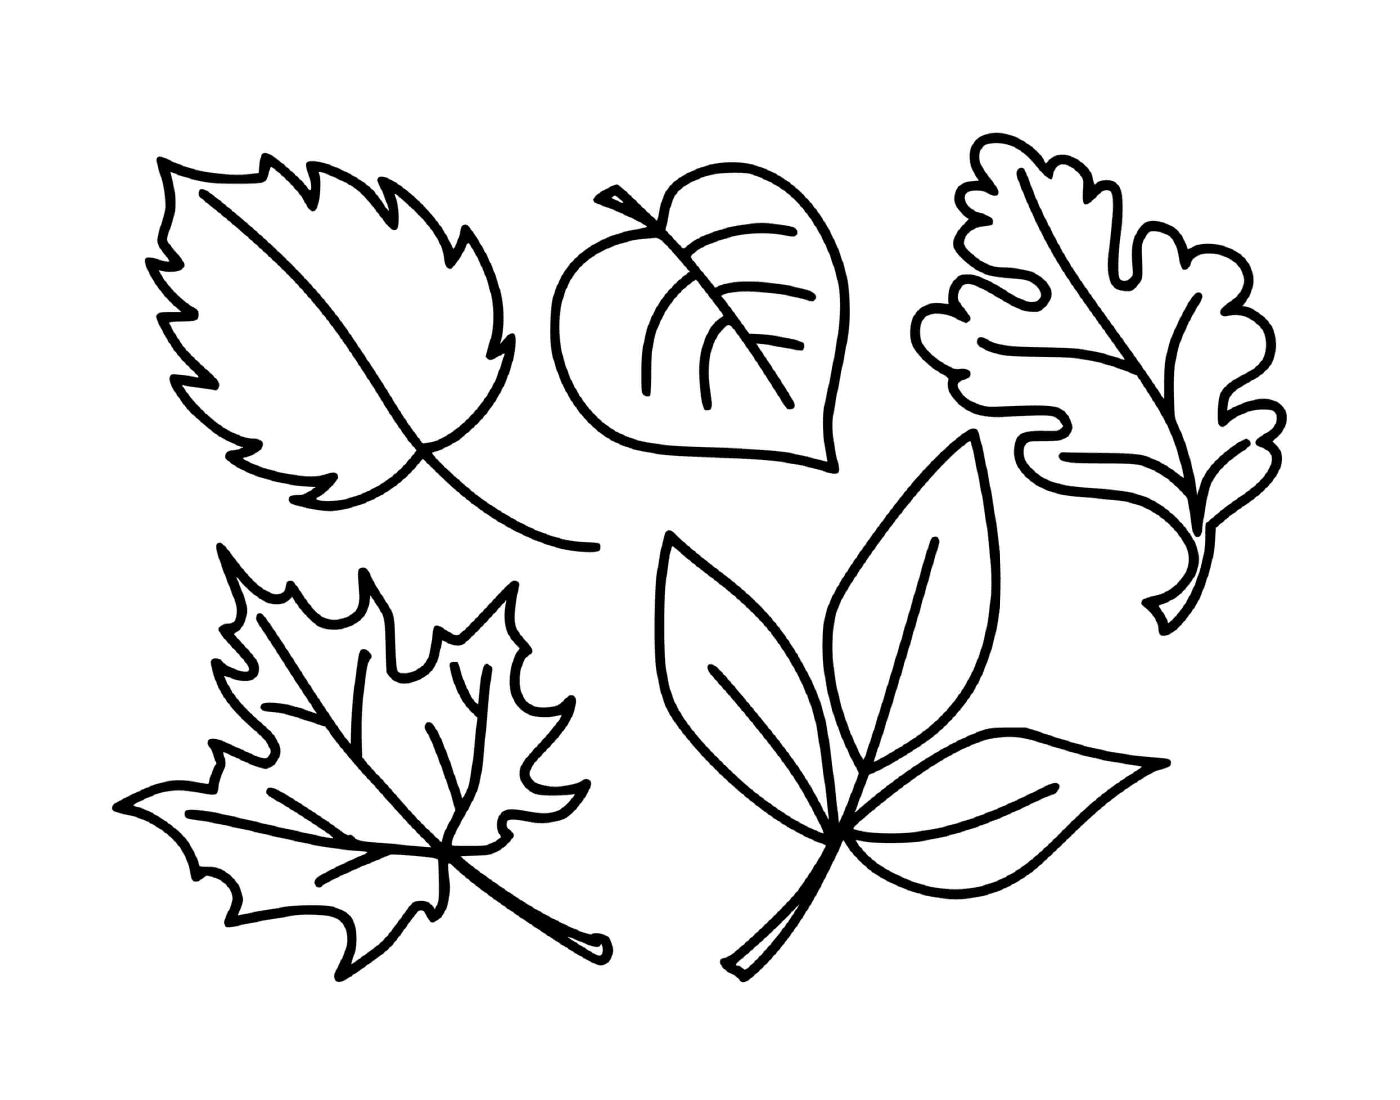  Several cartoons of the autumn season 